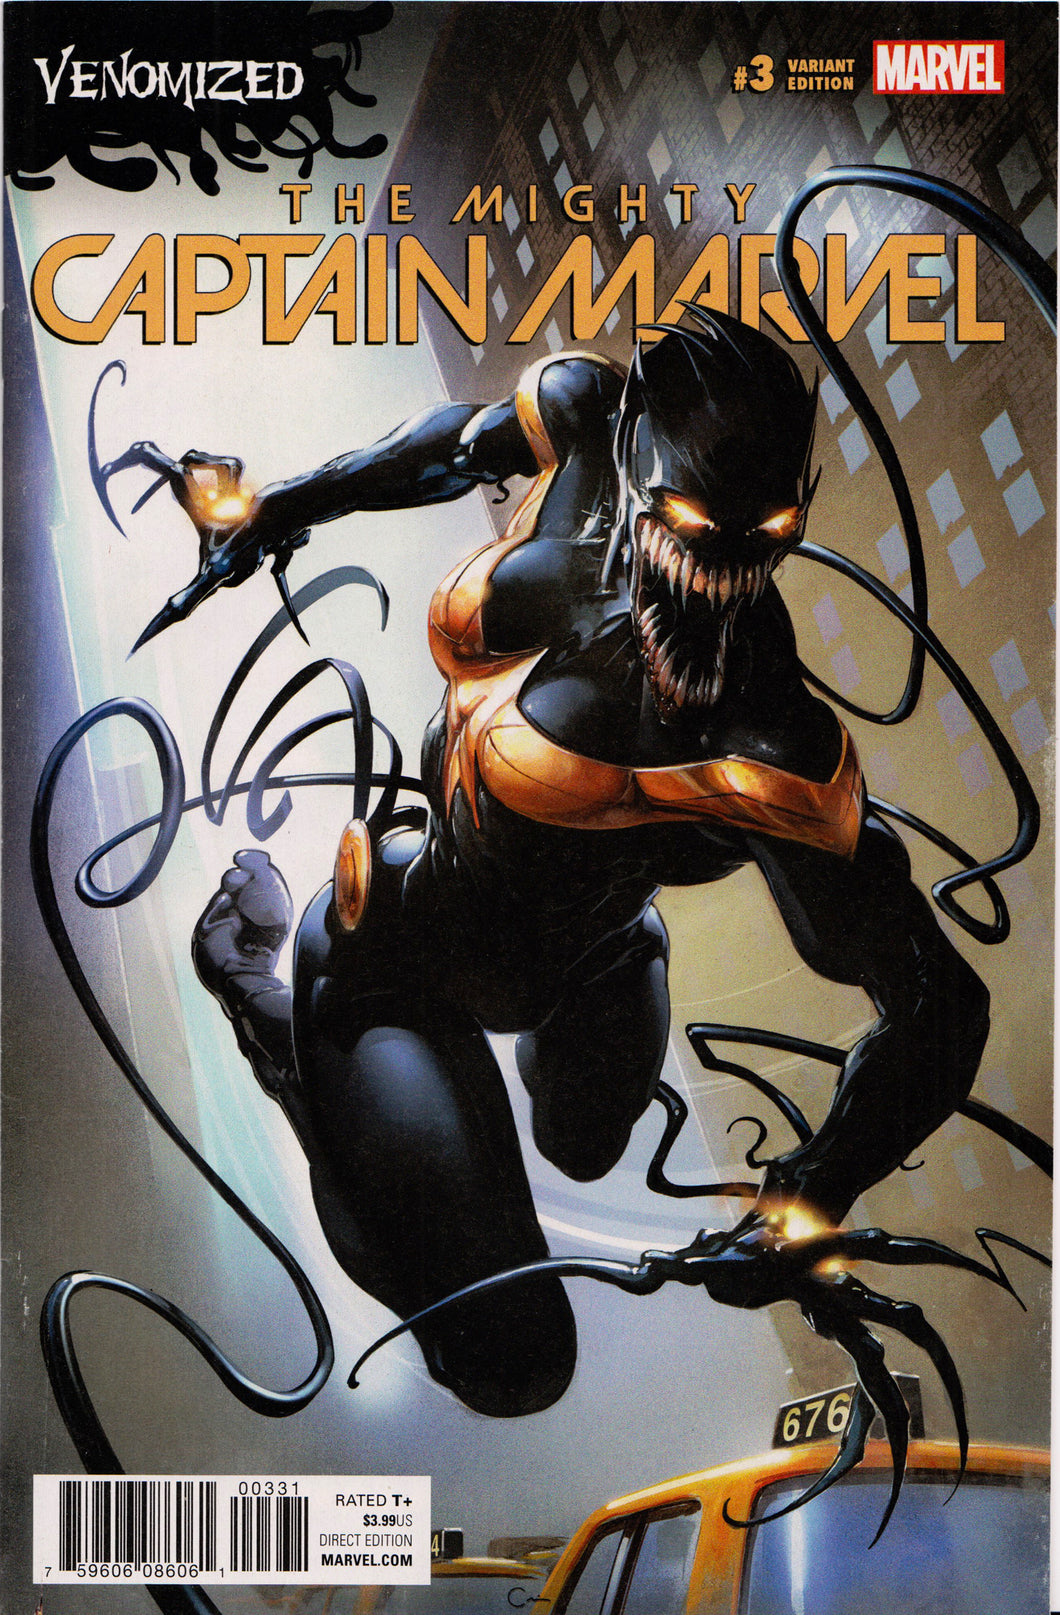 THE MIGHTY CAPTAIN MARVEL #3 (VENOMIZED VARIANT) COMIC BOOK ~ Marvel Comics